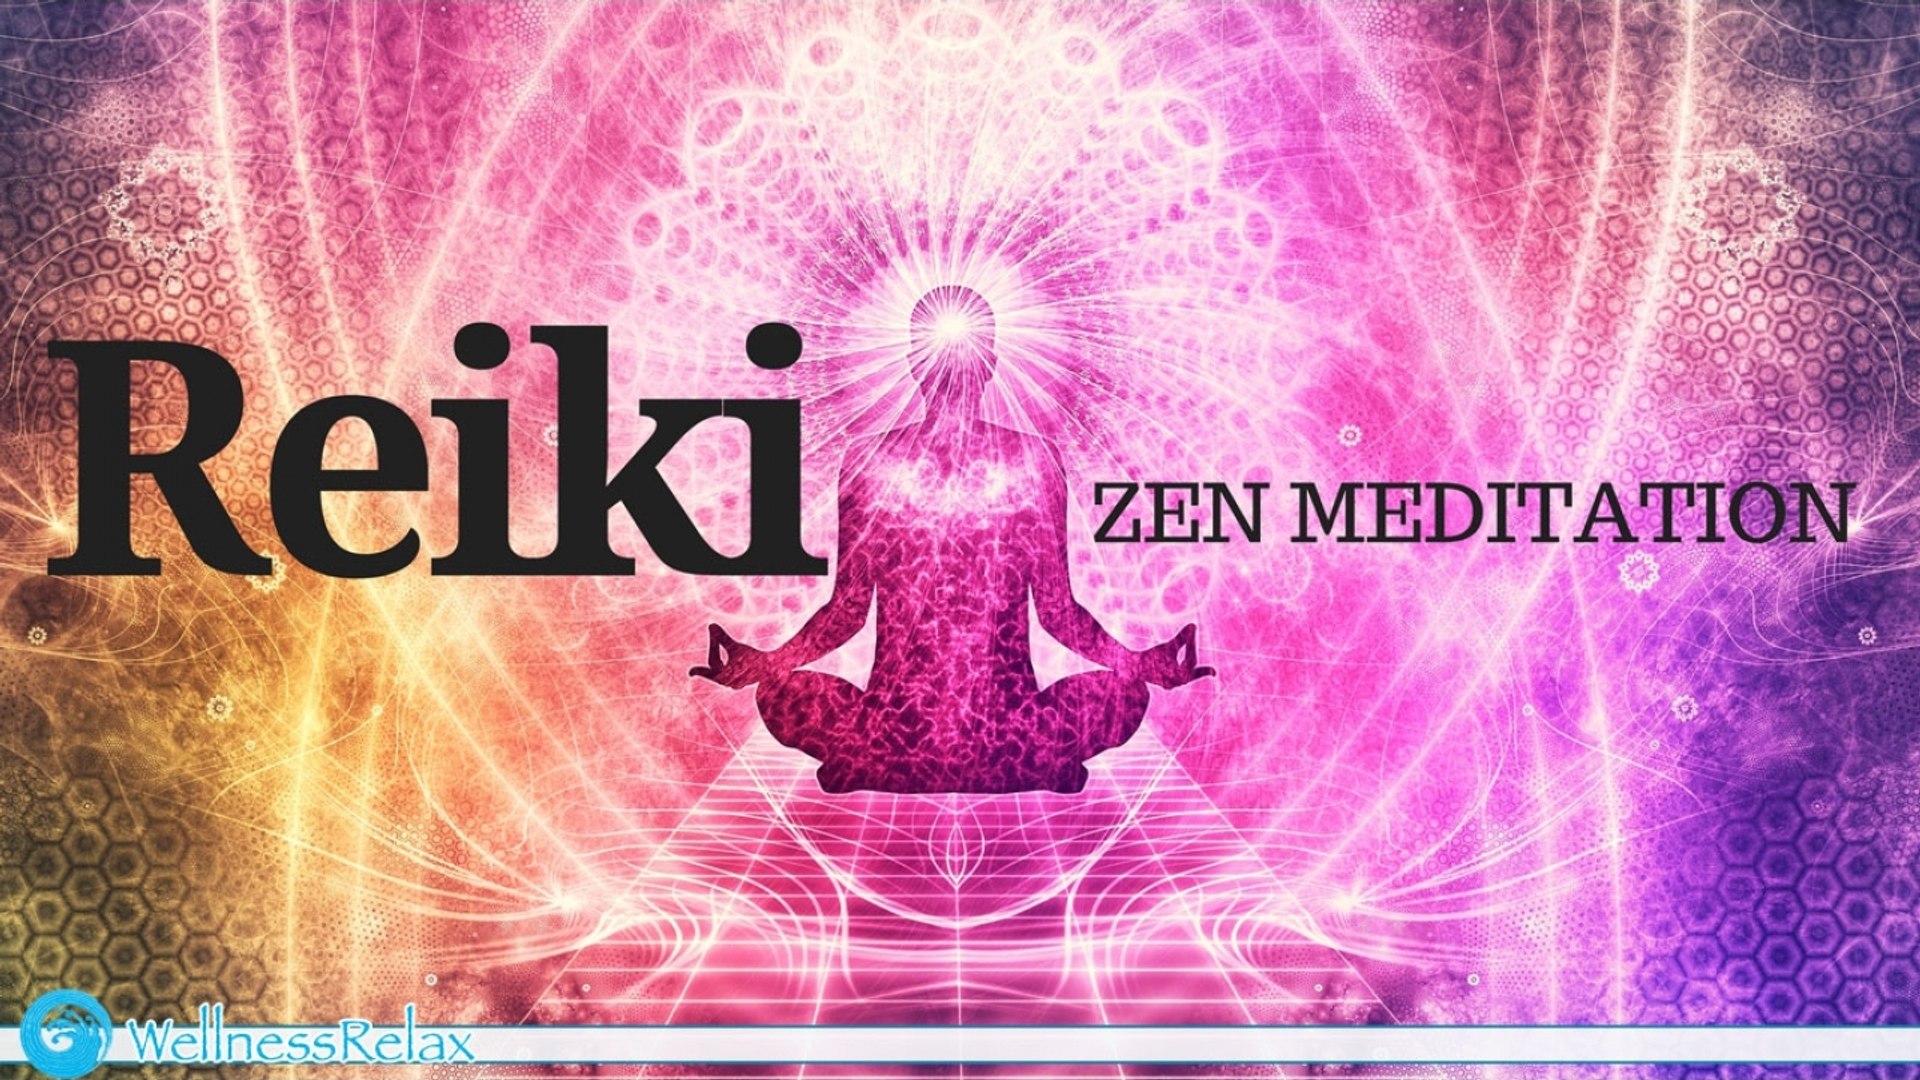 Marco Allevi - Reiki Zen Meditation Music: Relaxing Music, Healing Music, Meditation Music